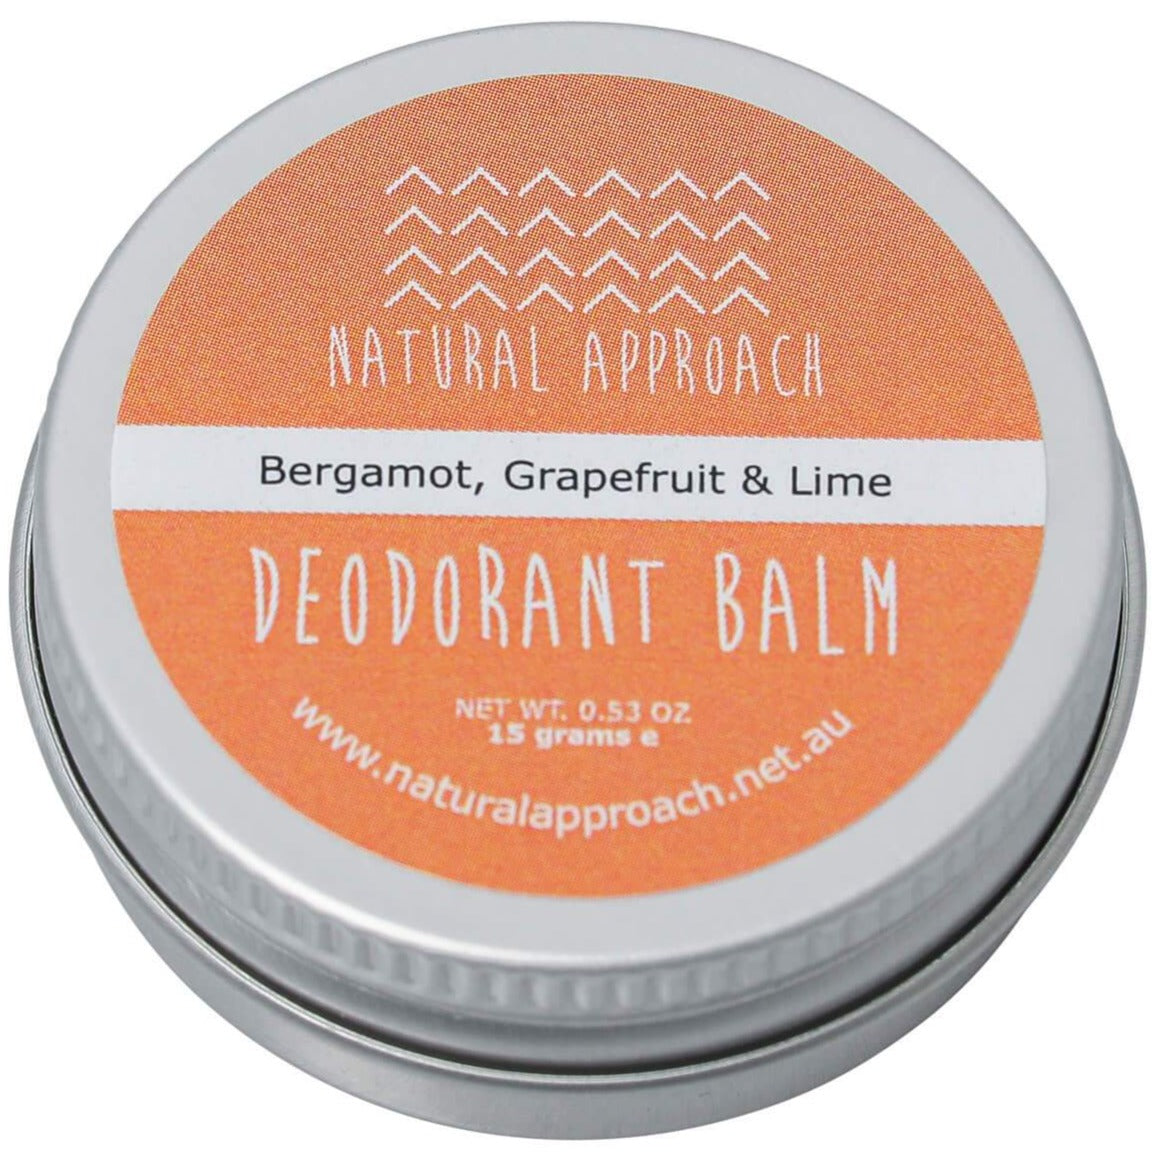 Bergamot, Grapefruit & Lime natural deodorant balm